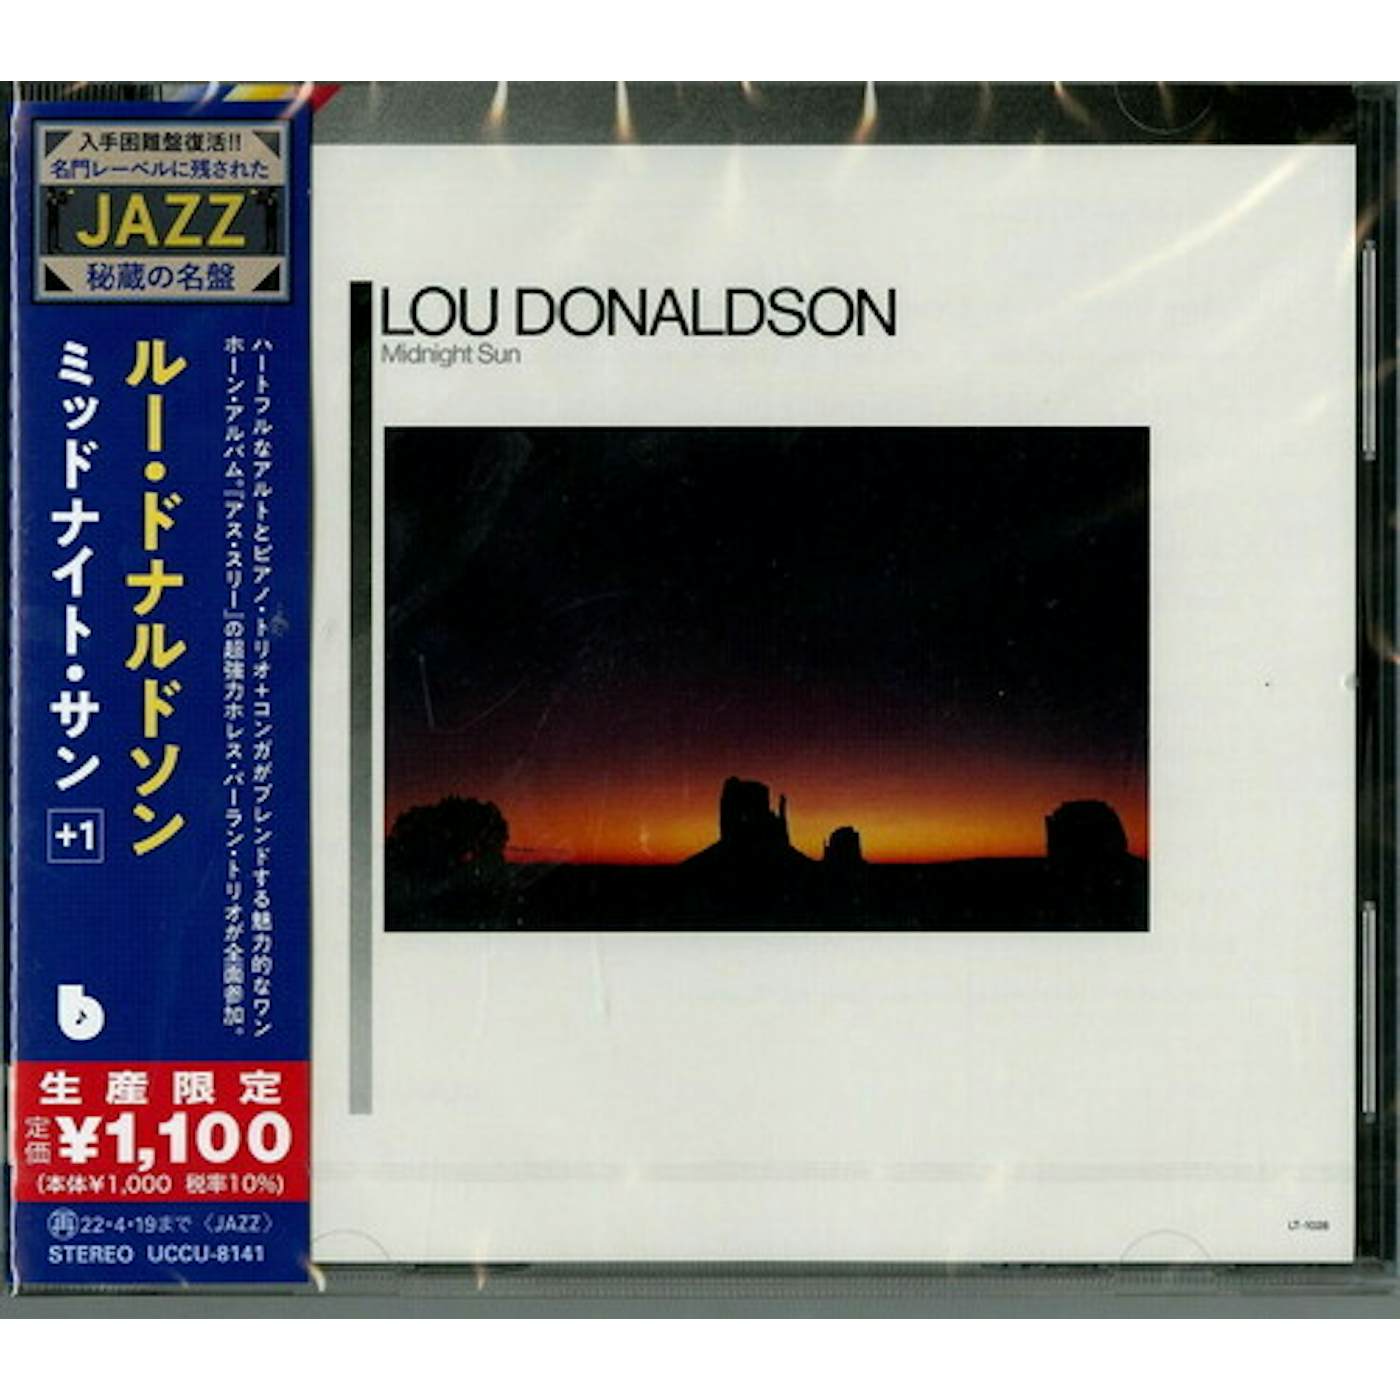 Lou Donaldson MIDNIGHT SUN CD